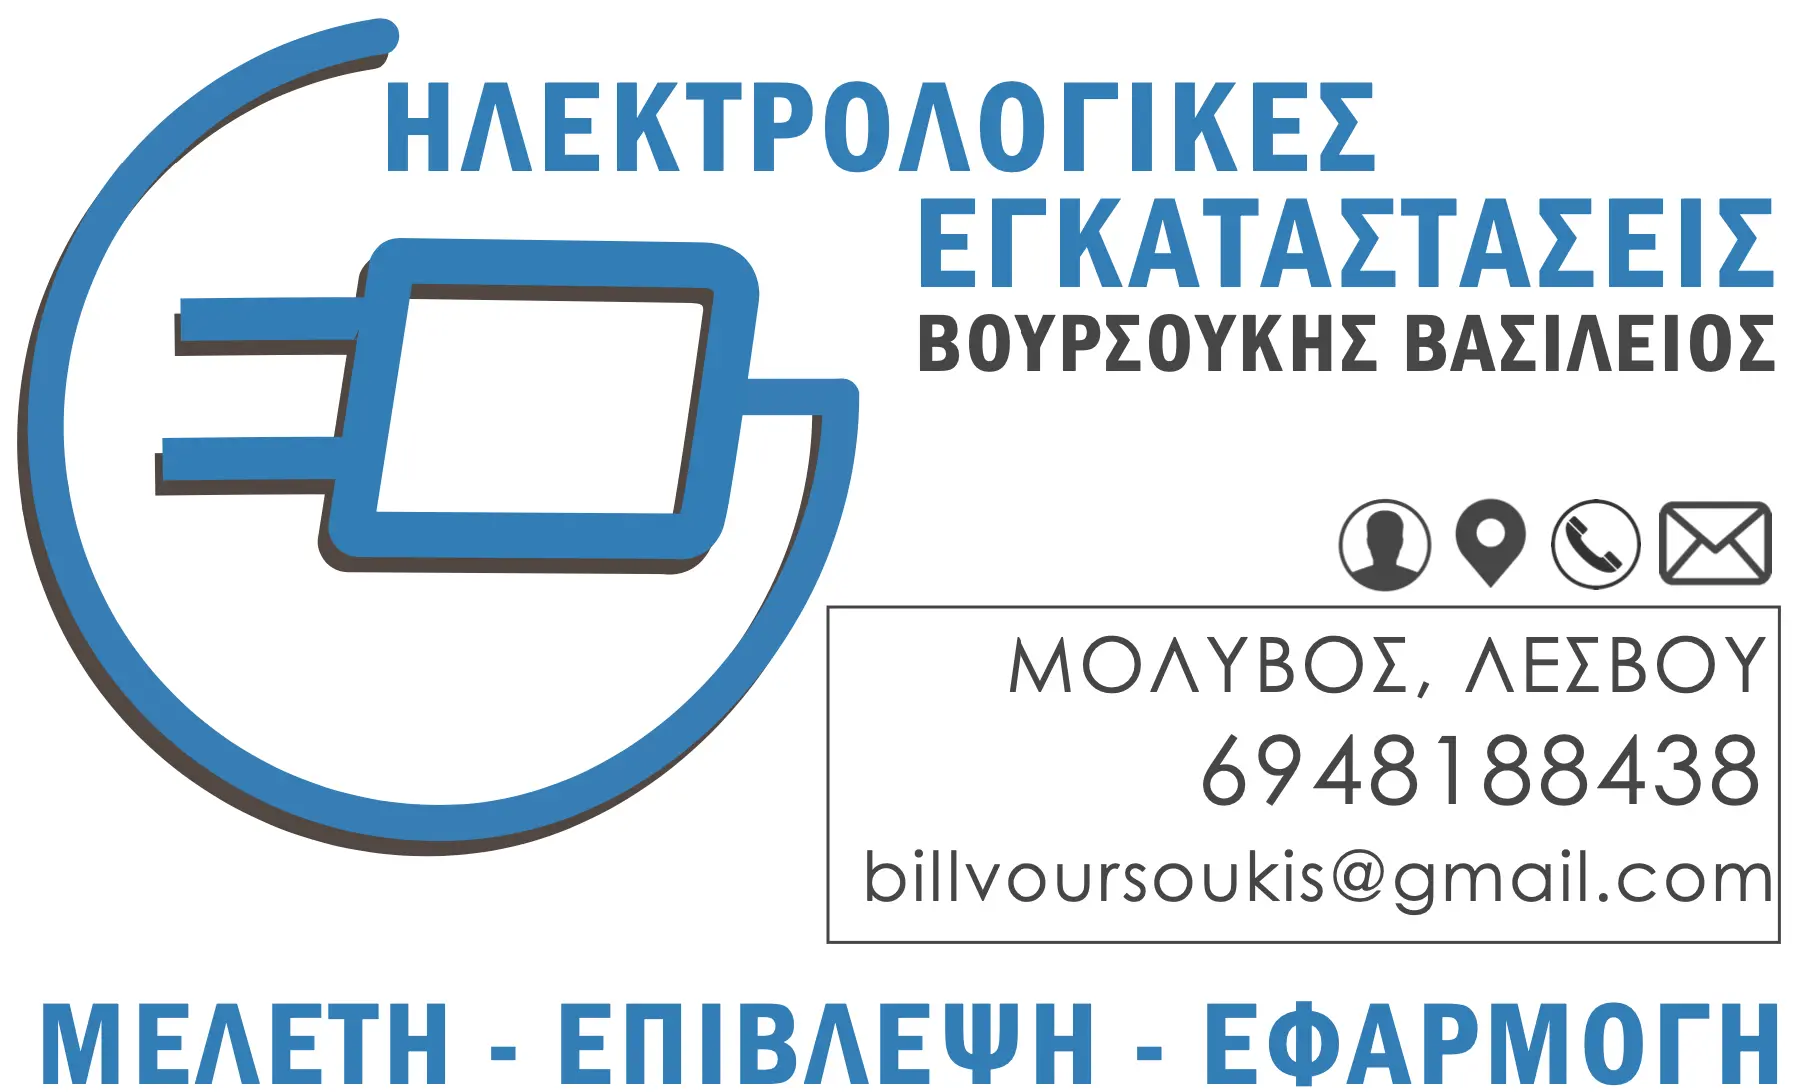 voursoukis-logo